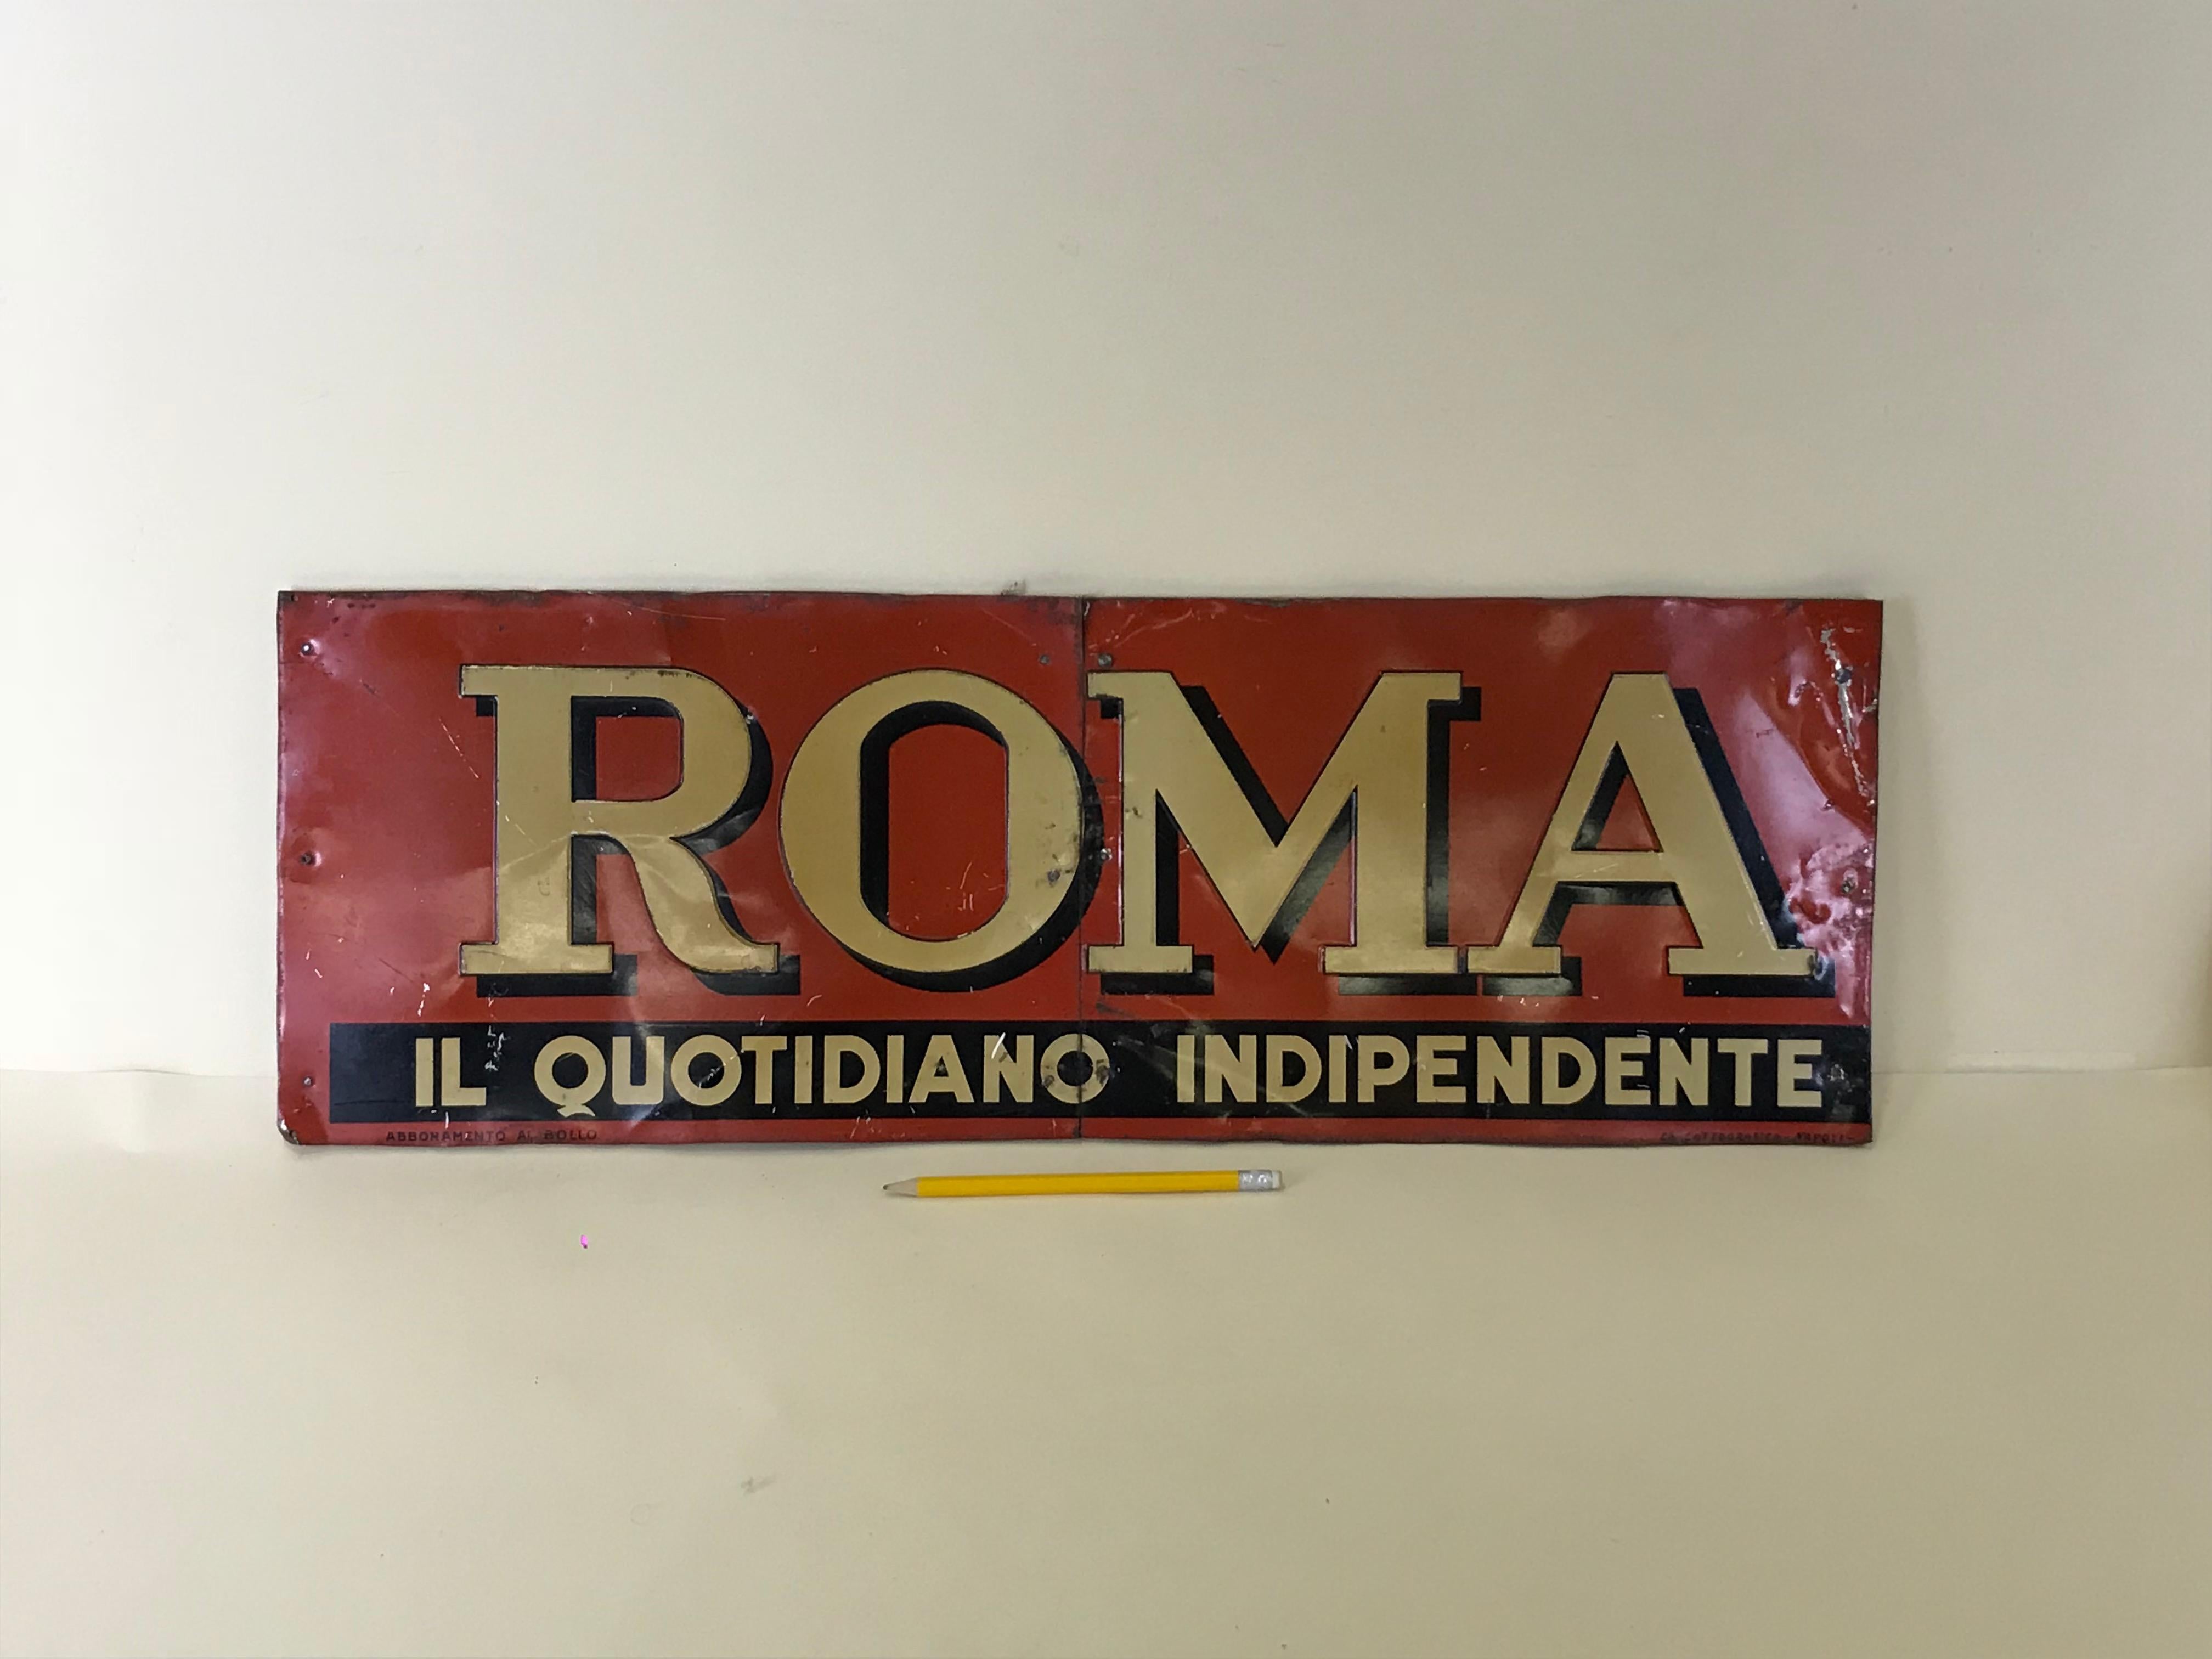 1950s Italian Vintage Transferpinted Red and Cream Roma Newspaper Sign (Moderne der Mitte des Jahrhunderts)